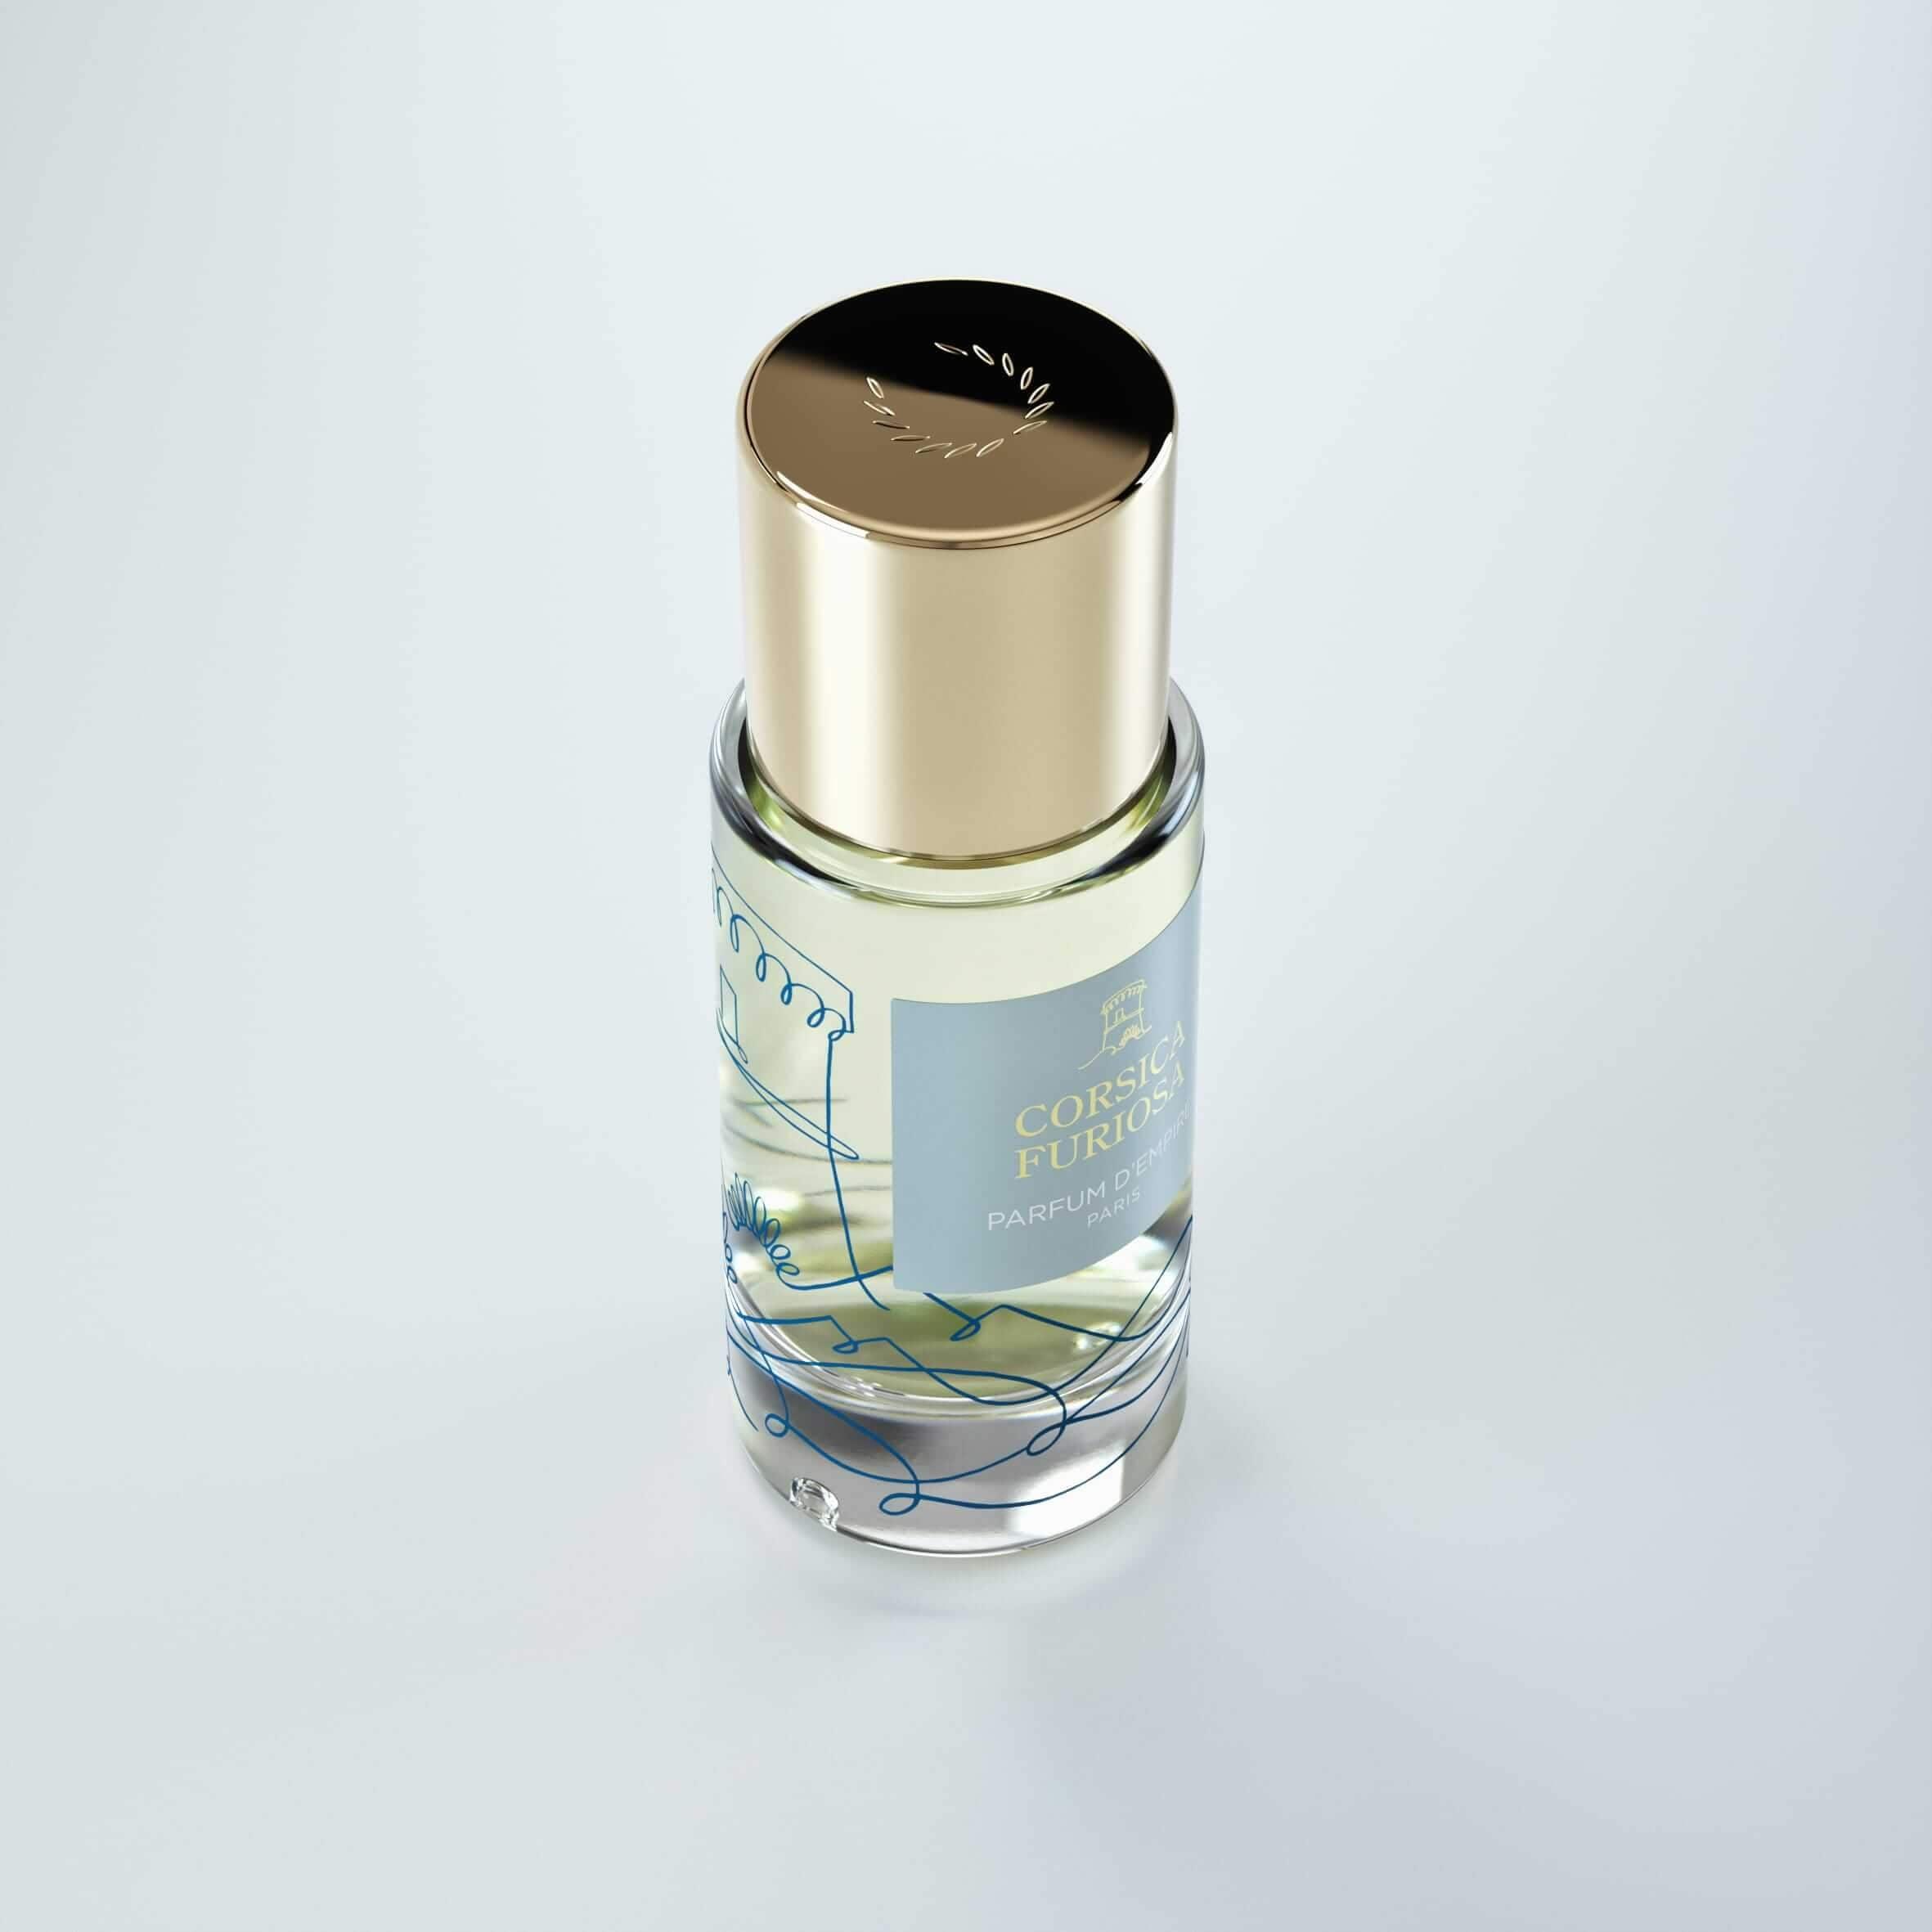 Parfum d'empire_Corsica-Furiosa